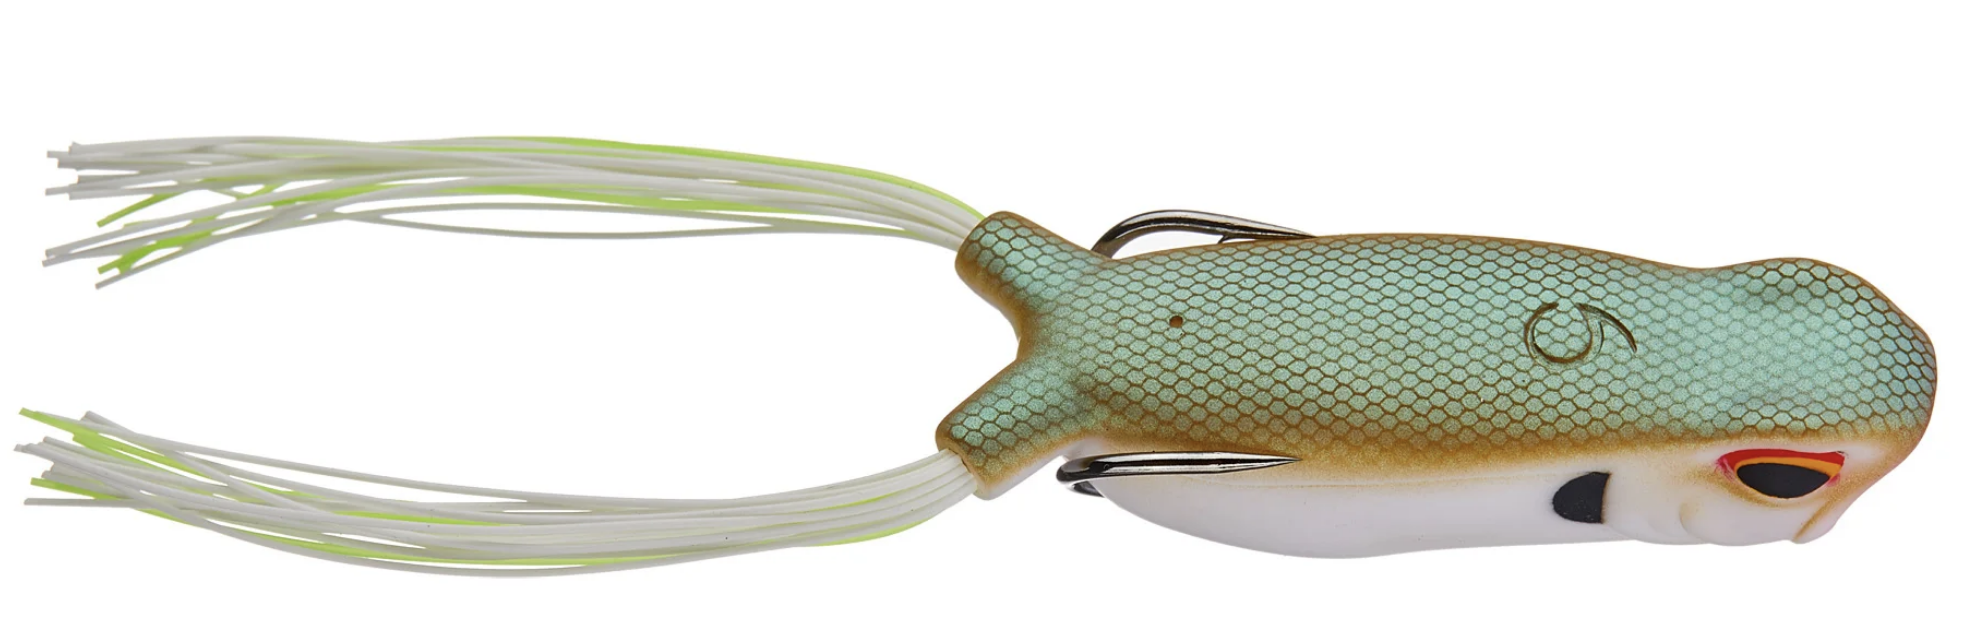 6th Sense Fishing Vega Frog - Modern Outdoor Tackle